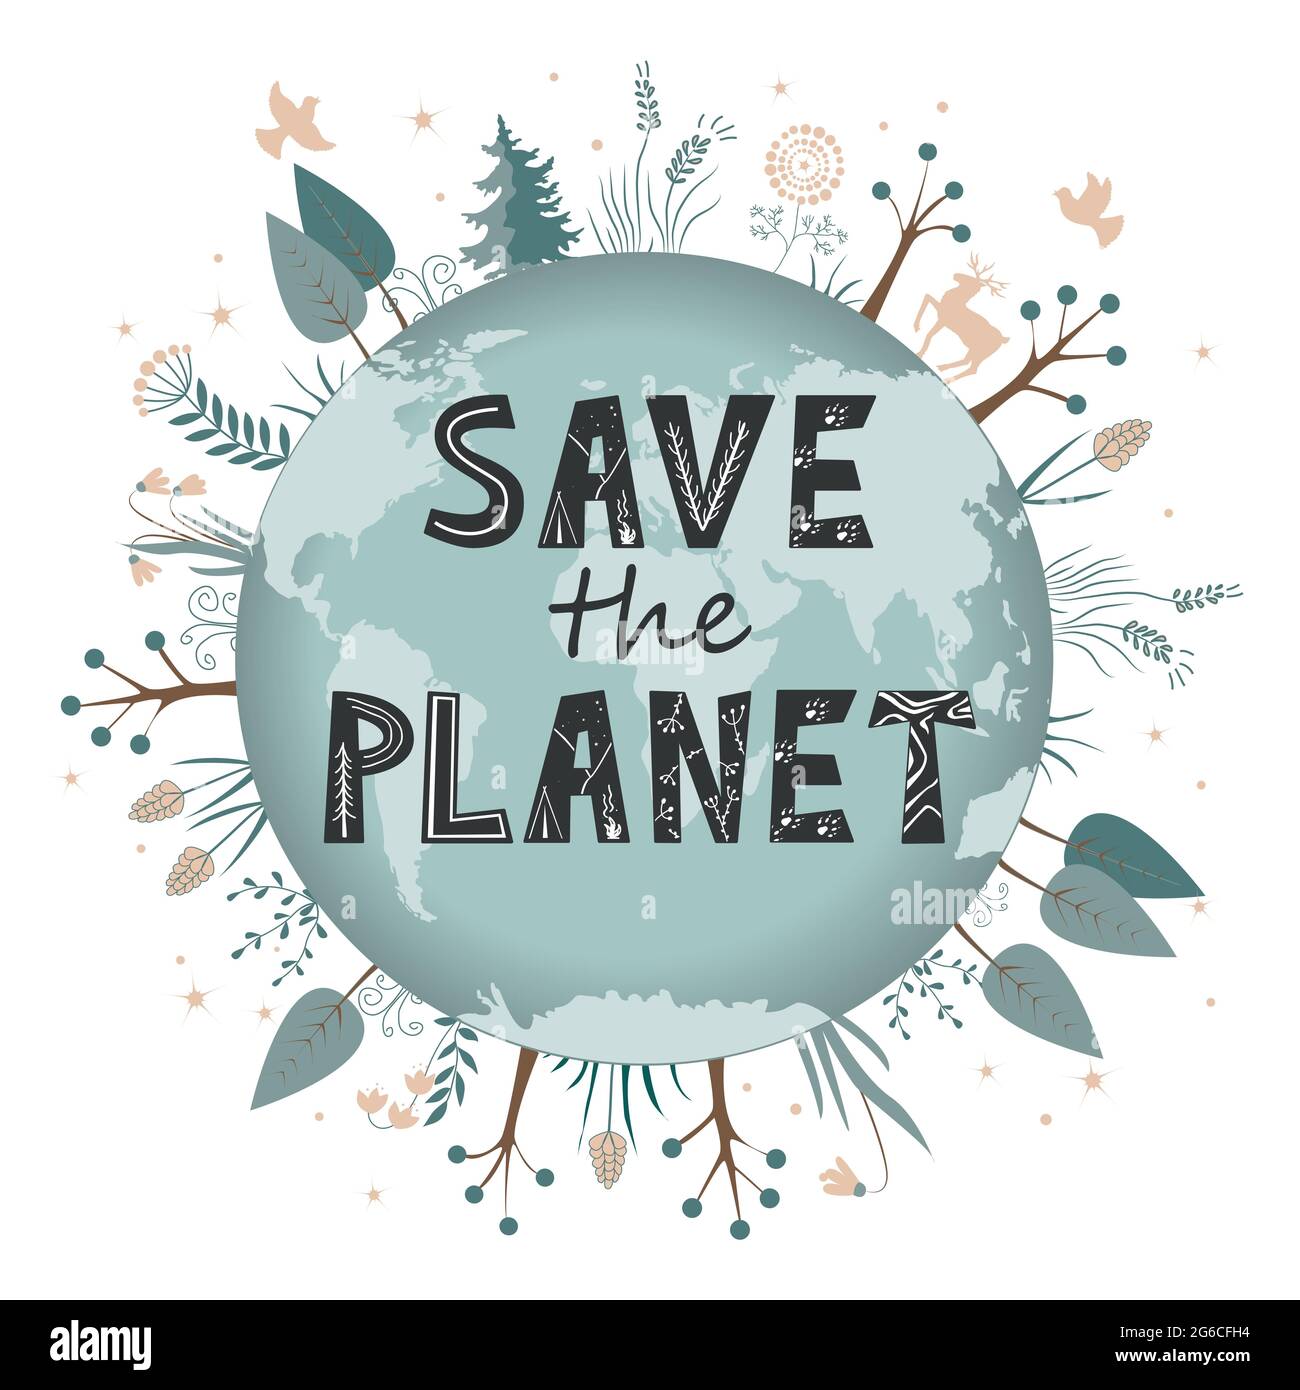 Rette unseren Planeten Erde, Ökologie Umweltschutz, Klimawandel, Earth Day April 22. Vektor-isolierte Illustration, skandinavische Schriftzüge Stock Vektor